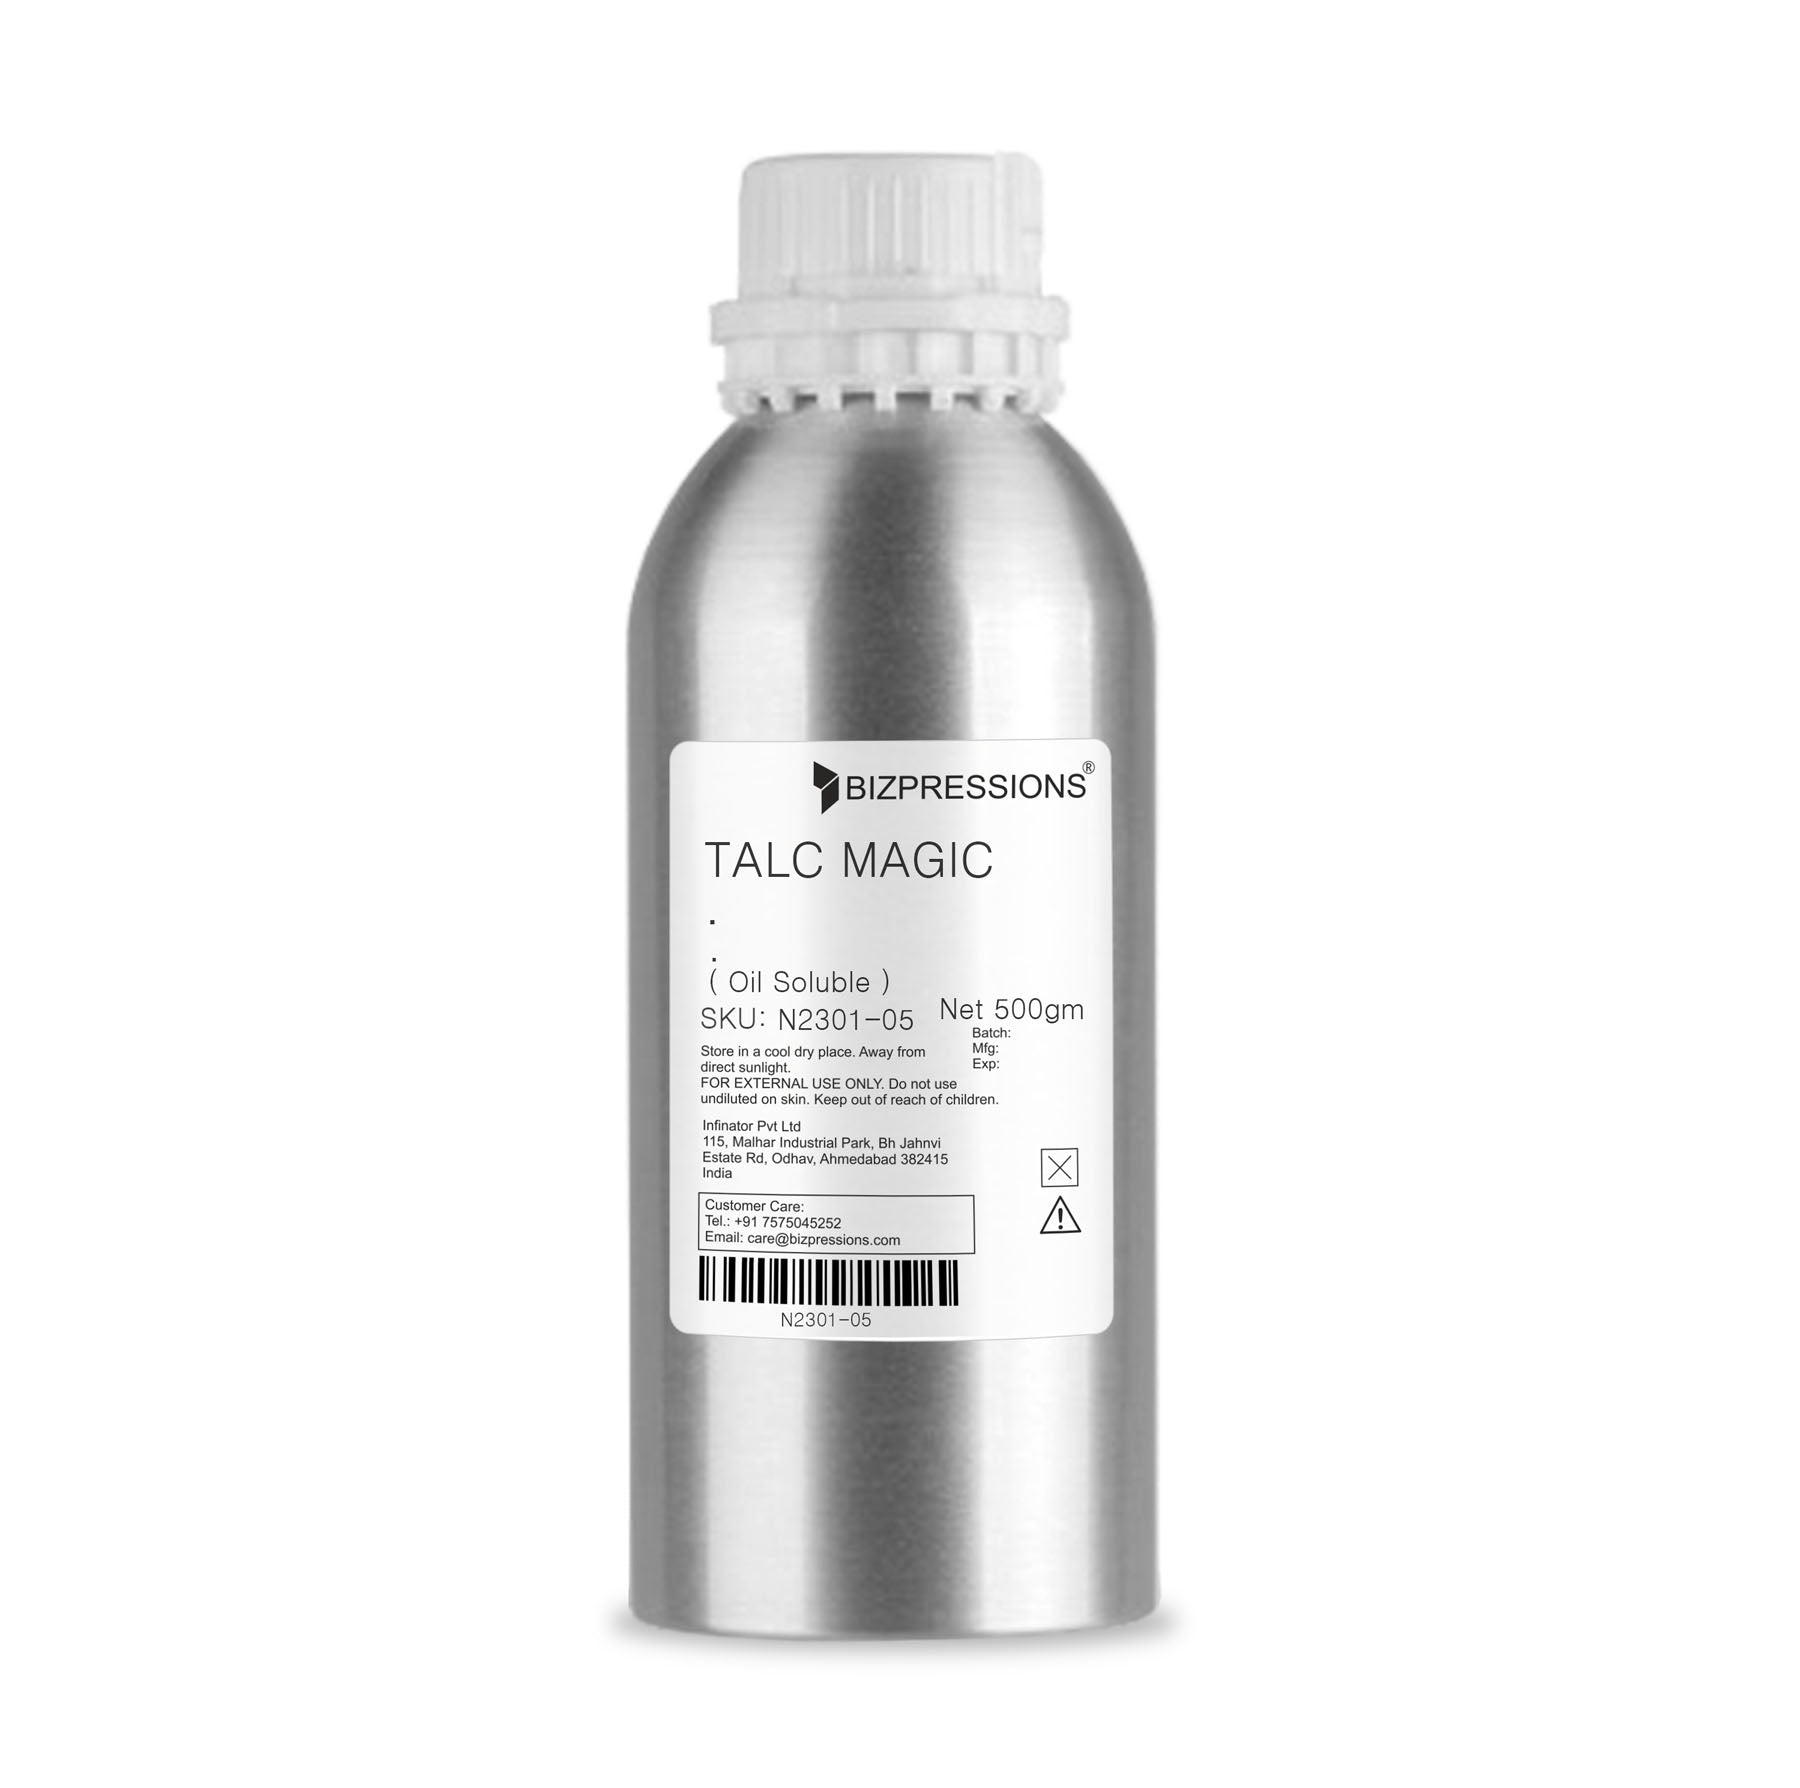 TALC MAGIC - Fragrance ( Oil Soluble ) - 500 gm